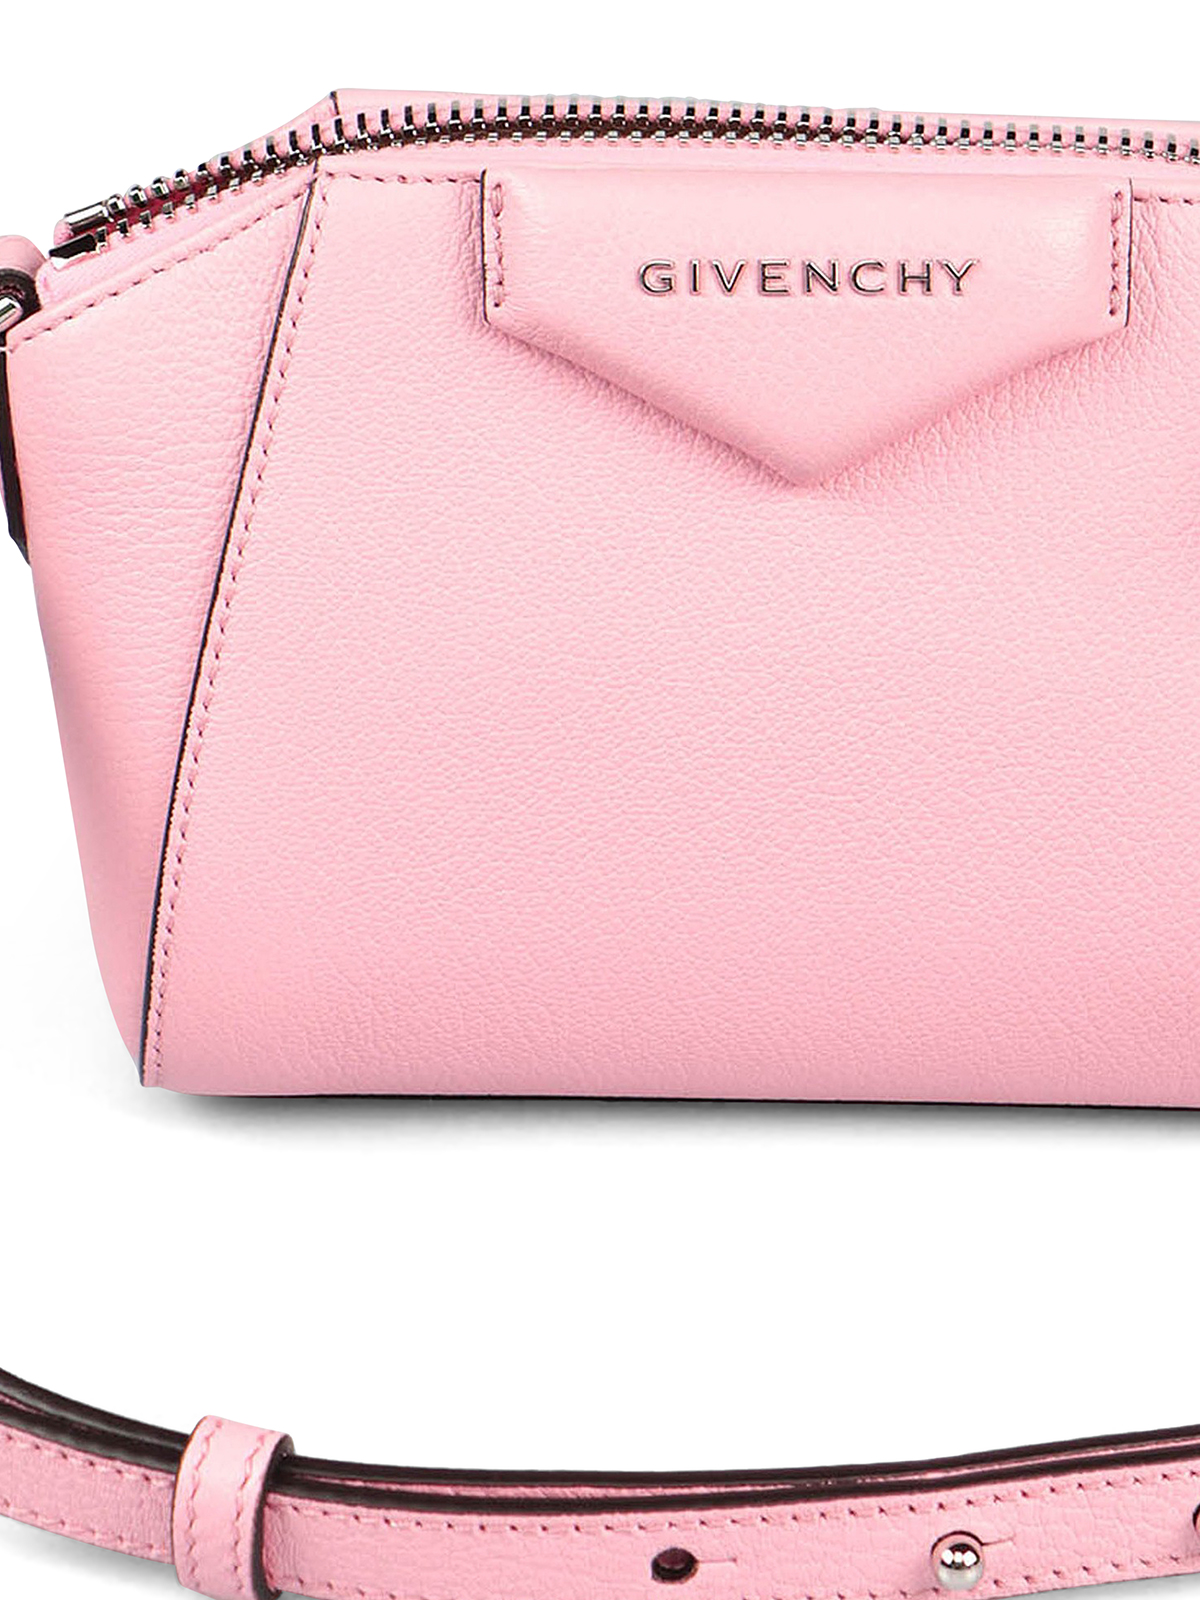 Cross body bags Givenchy - Antigona Nano bag - BBU017B00B105